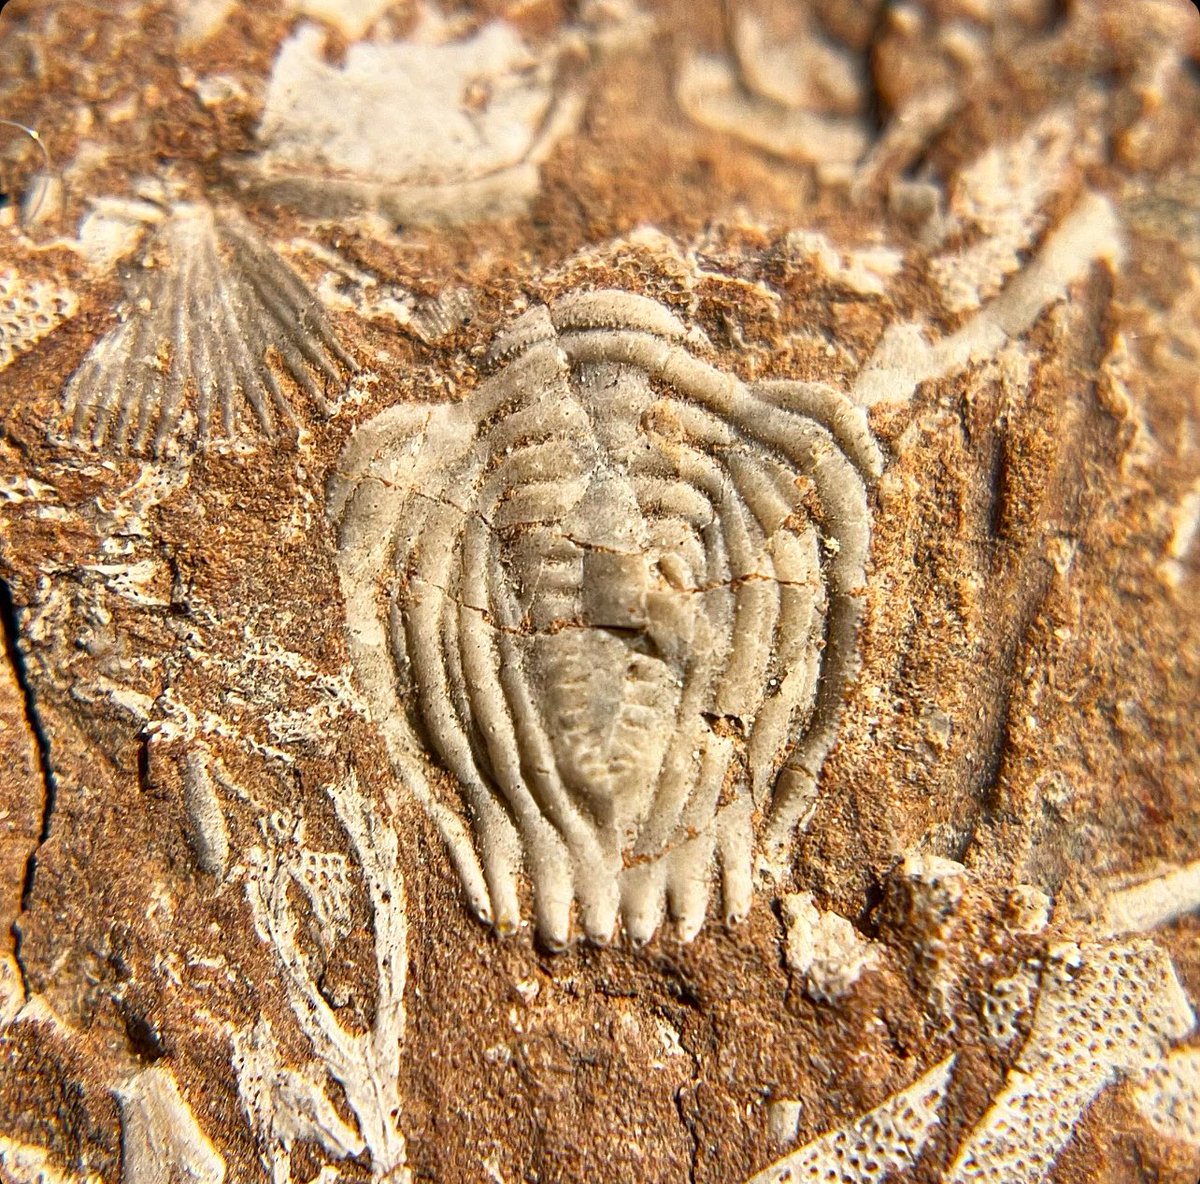 Pygidium of 𝘾𝙮𝙗𝙚𝙡𝙚𝙡𝙡𝙖 𝙧𝙚𝙭 (Nieszkowski, 1857) together with bryozoans Encrinuridae Kukruse stage, Sandbian, Upper Ordovician Quarry near Narva, Estonia #trilobites #fossilfriday